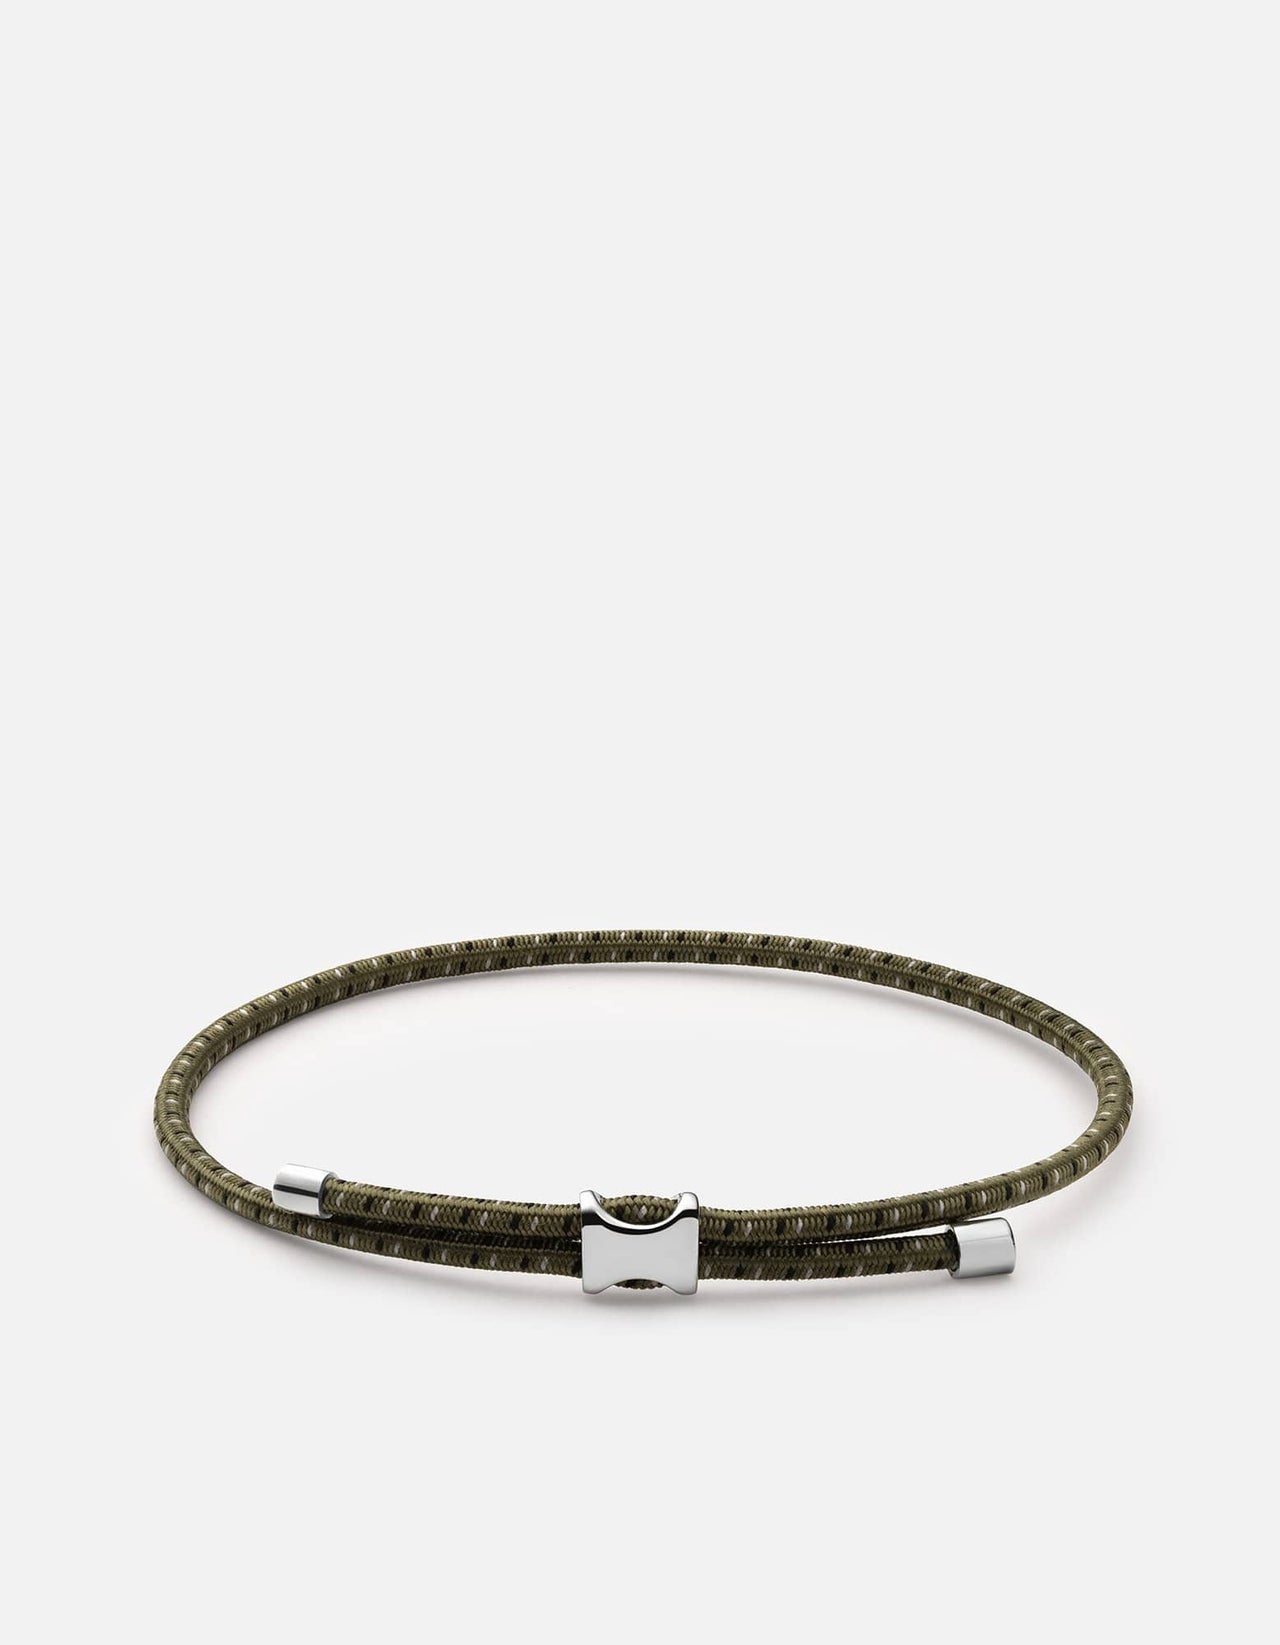 BOTTEGA VENETA⚡️Intrecciato woven leather double buckle wrap cuff bracelet  XS | eBay